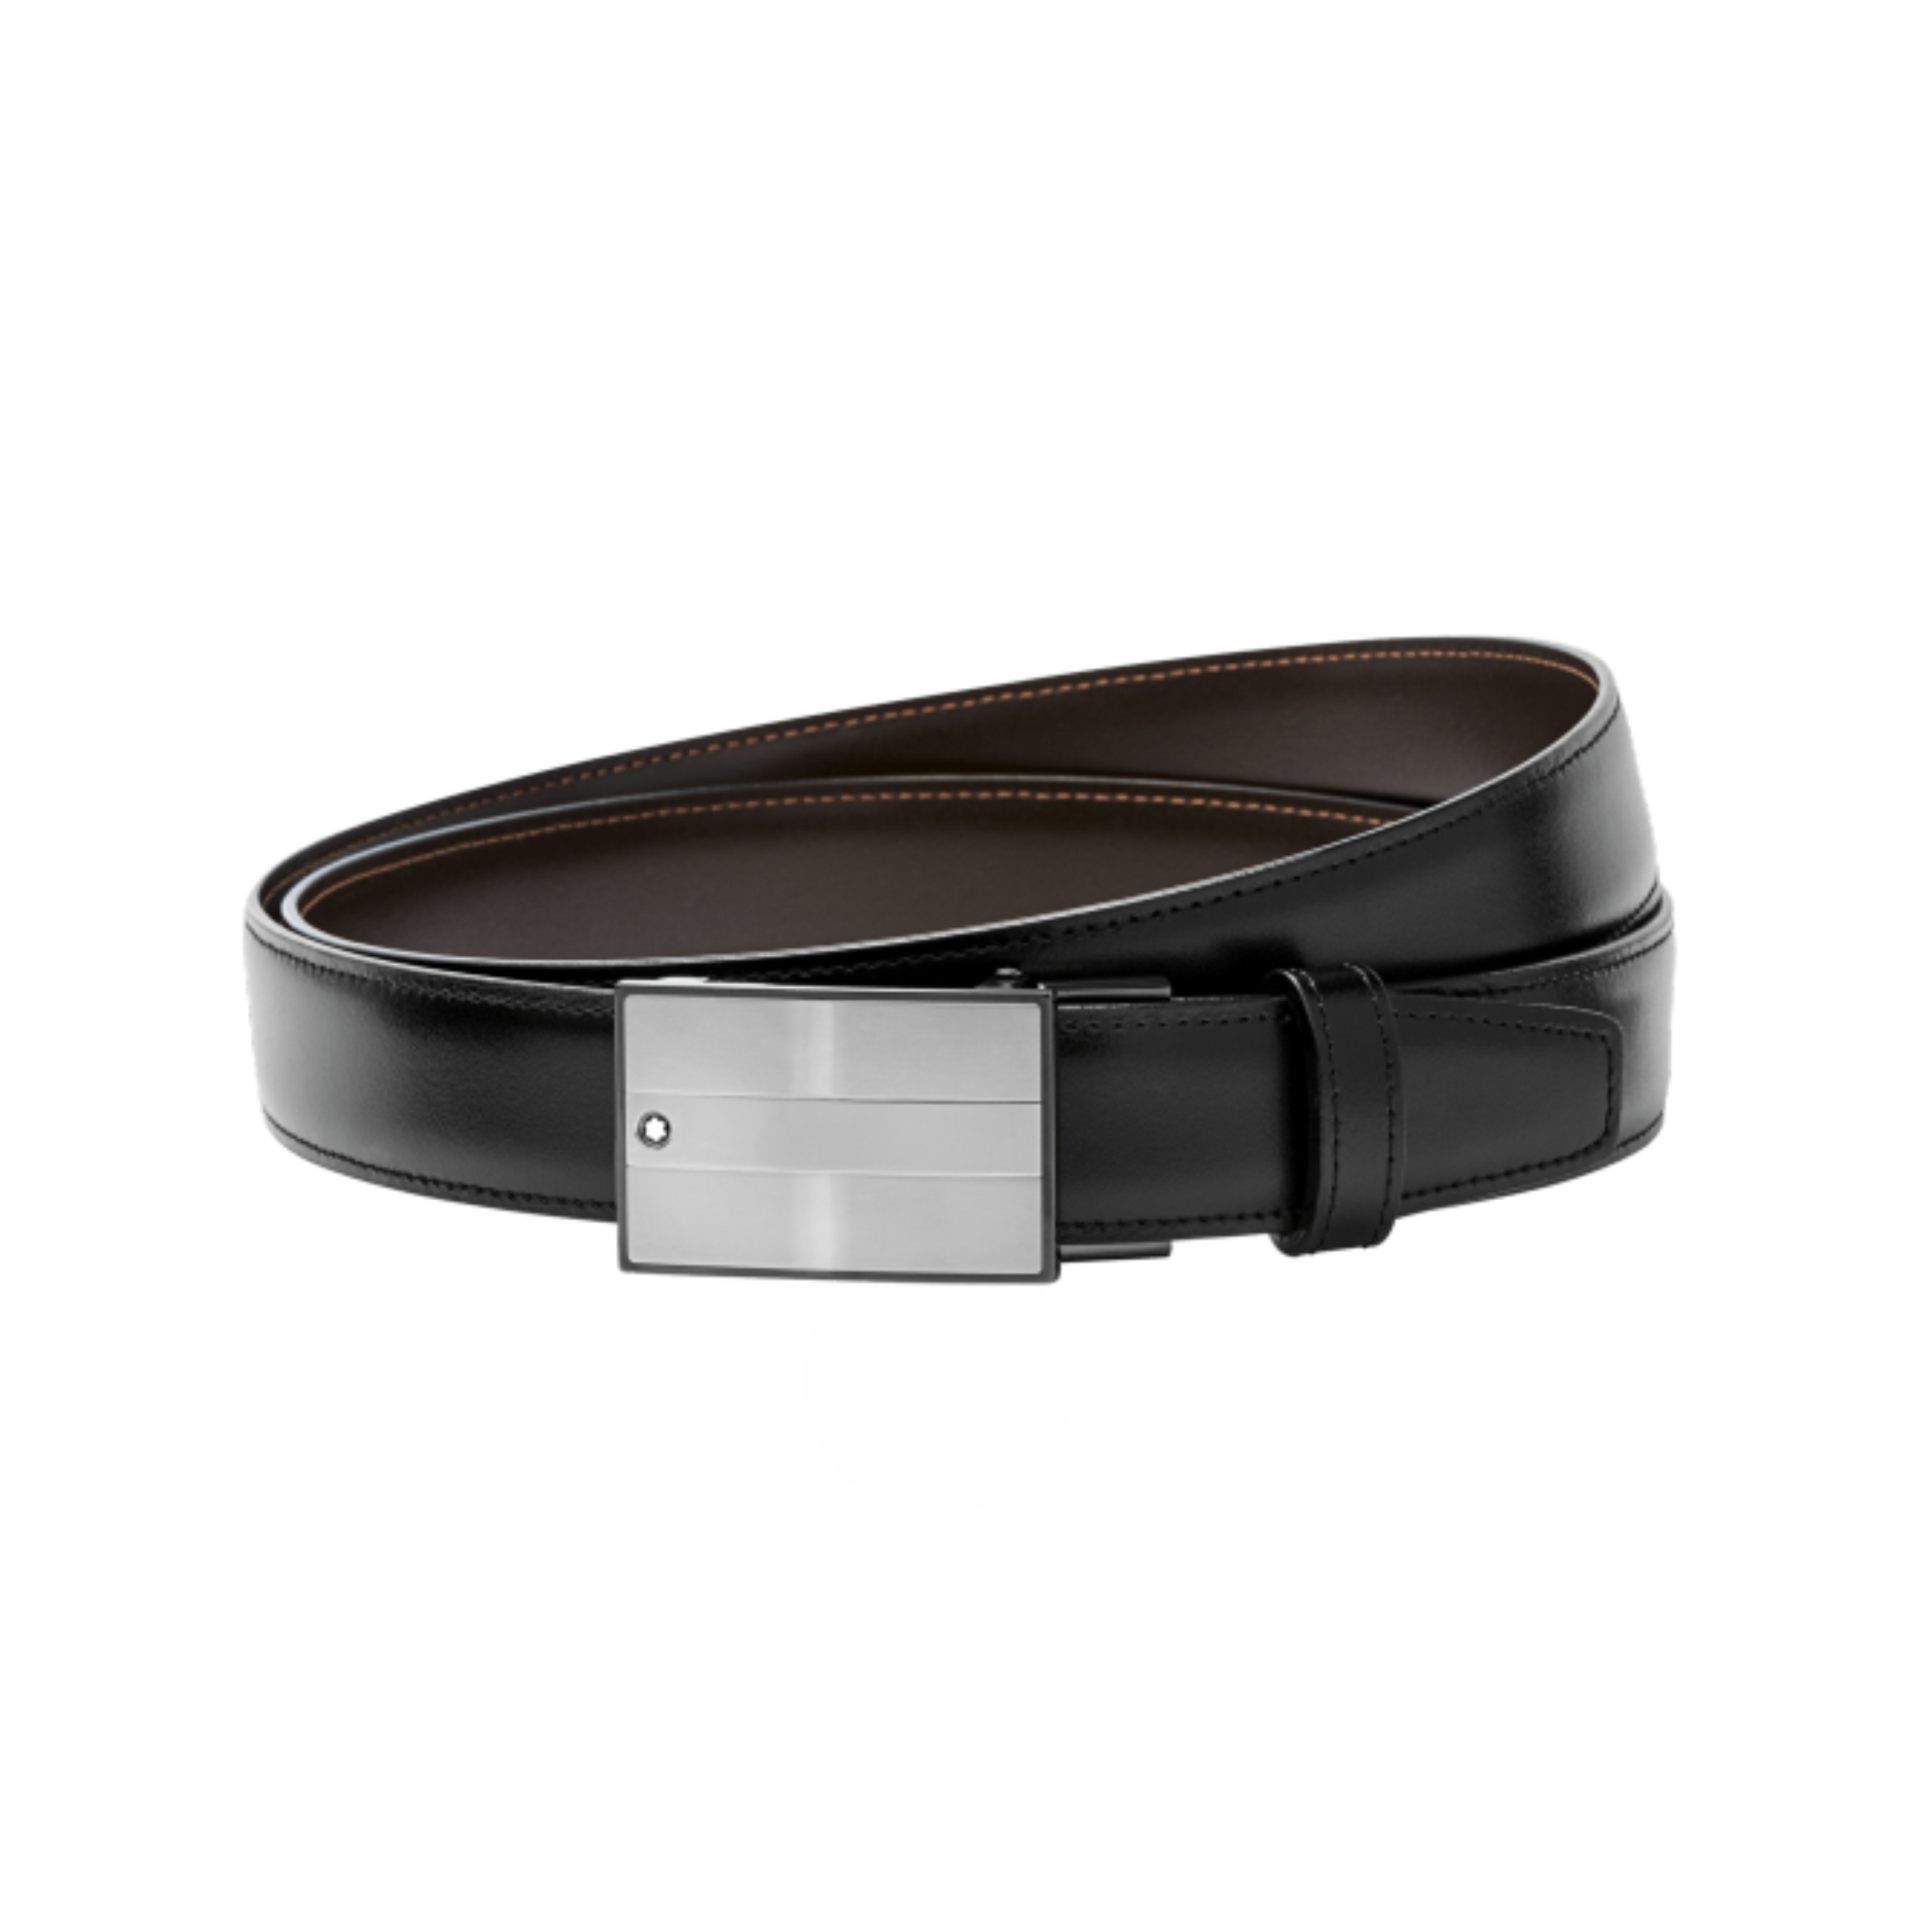 Montblanc Belt - Reversible Black & Brown Leather Strap